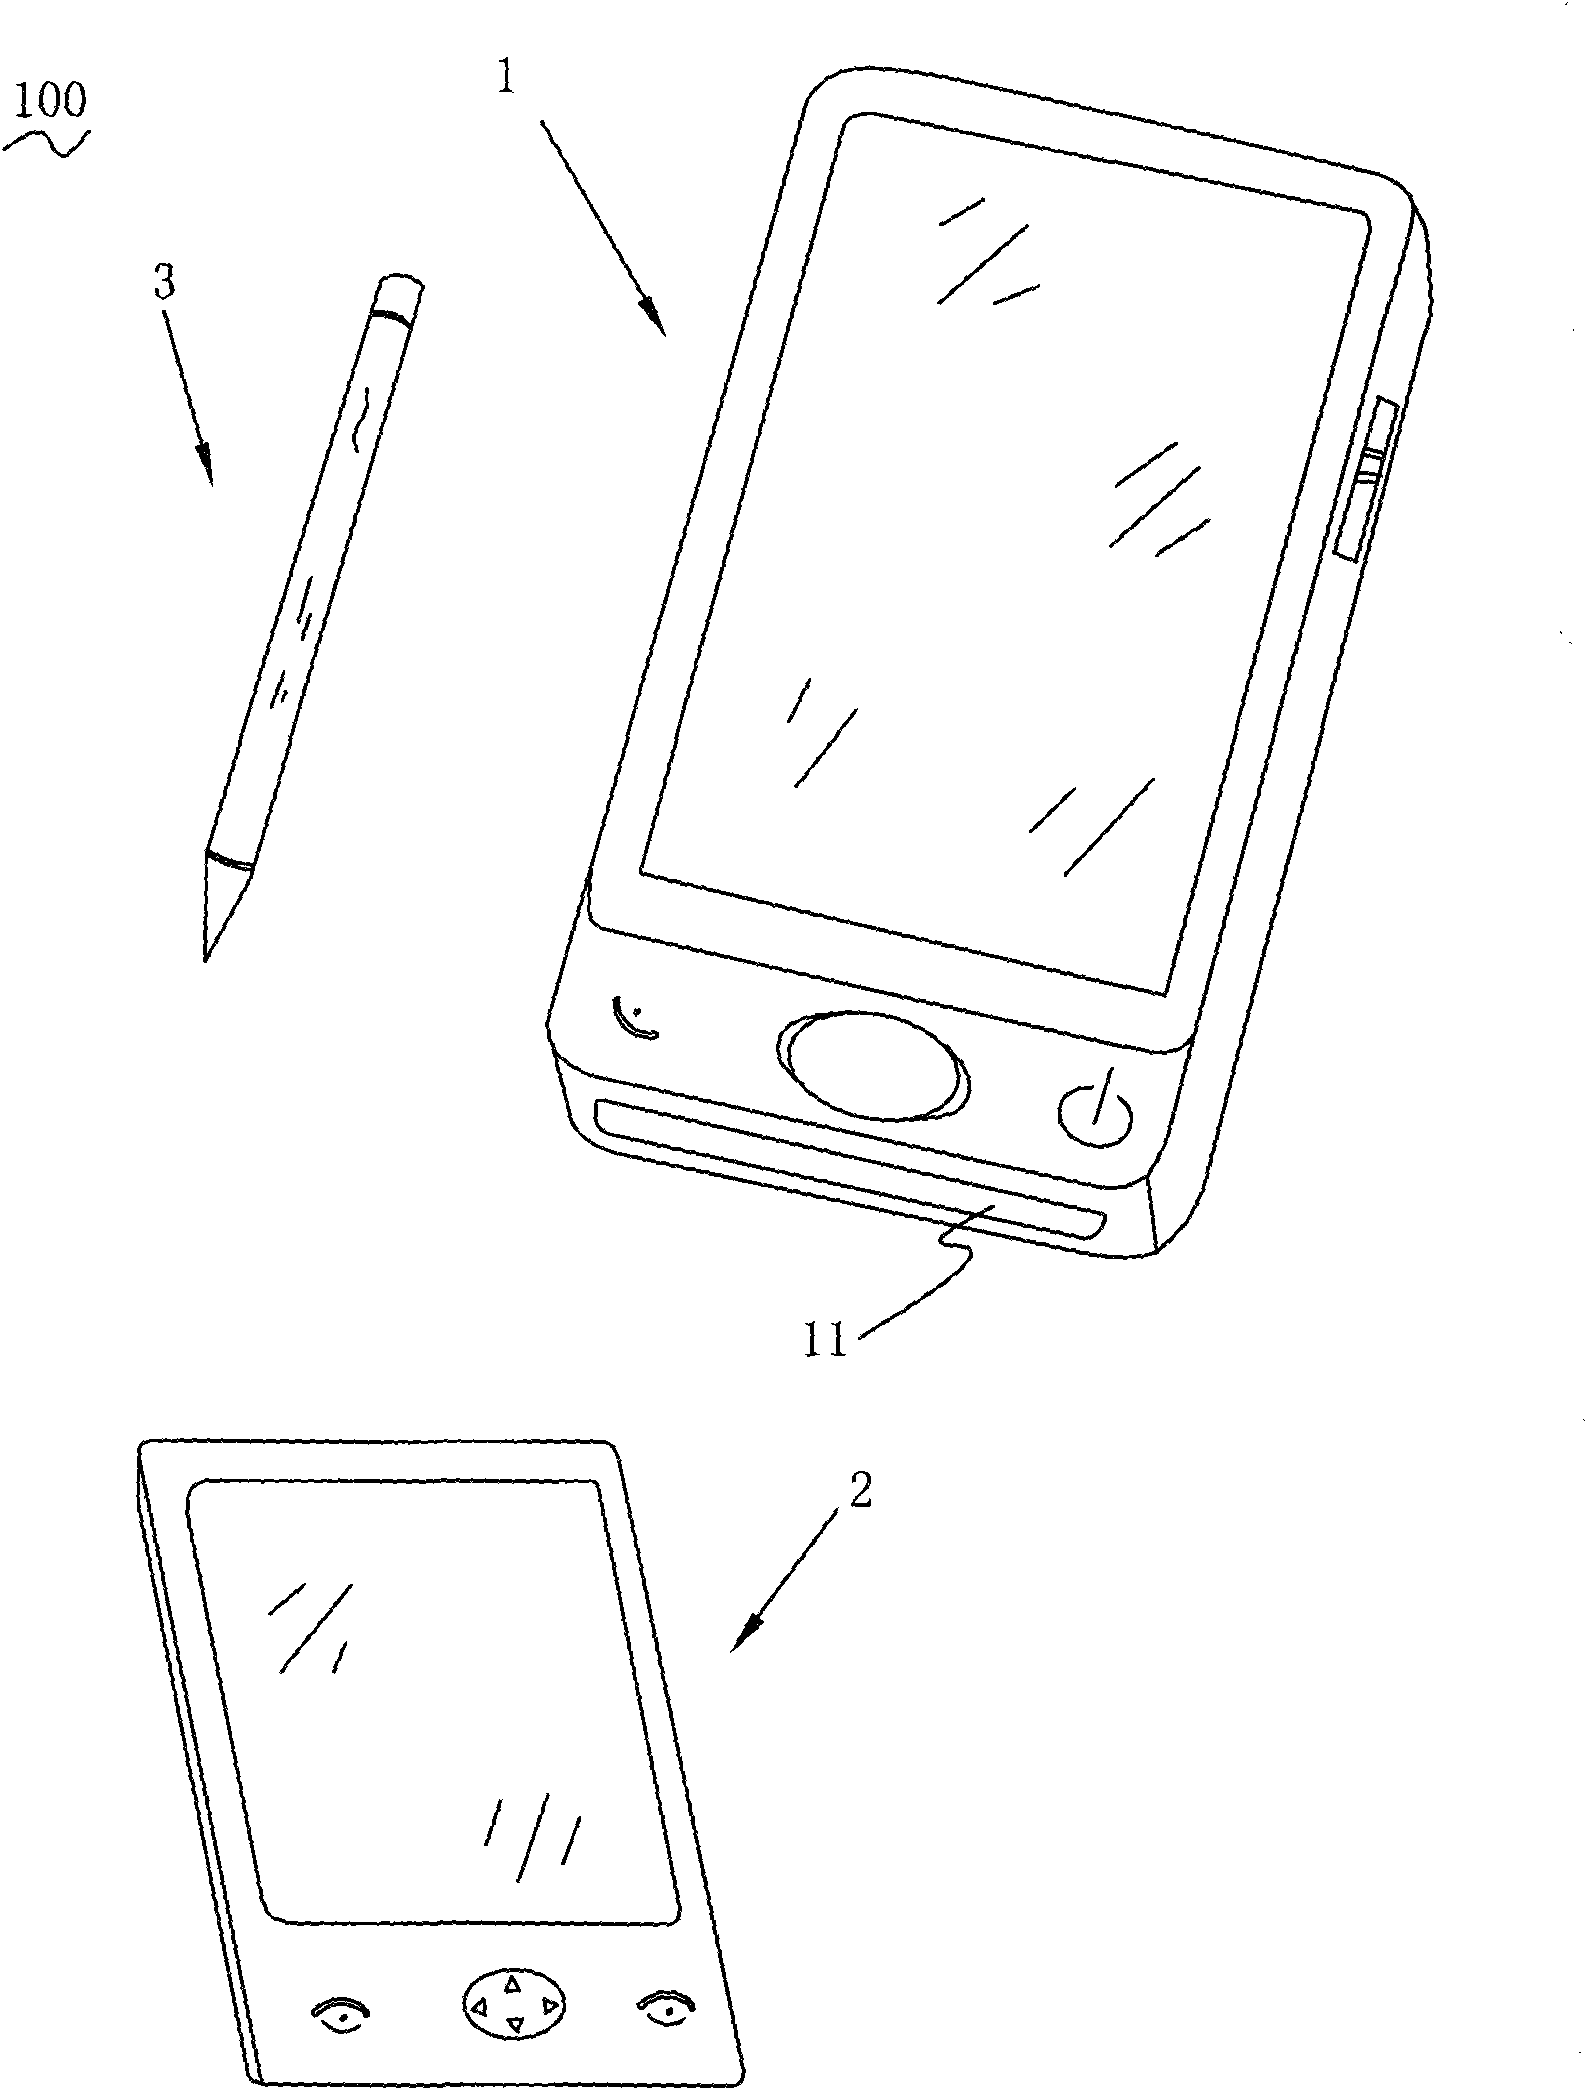 Split mobile communication device